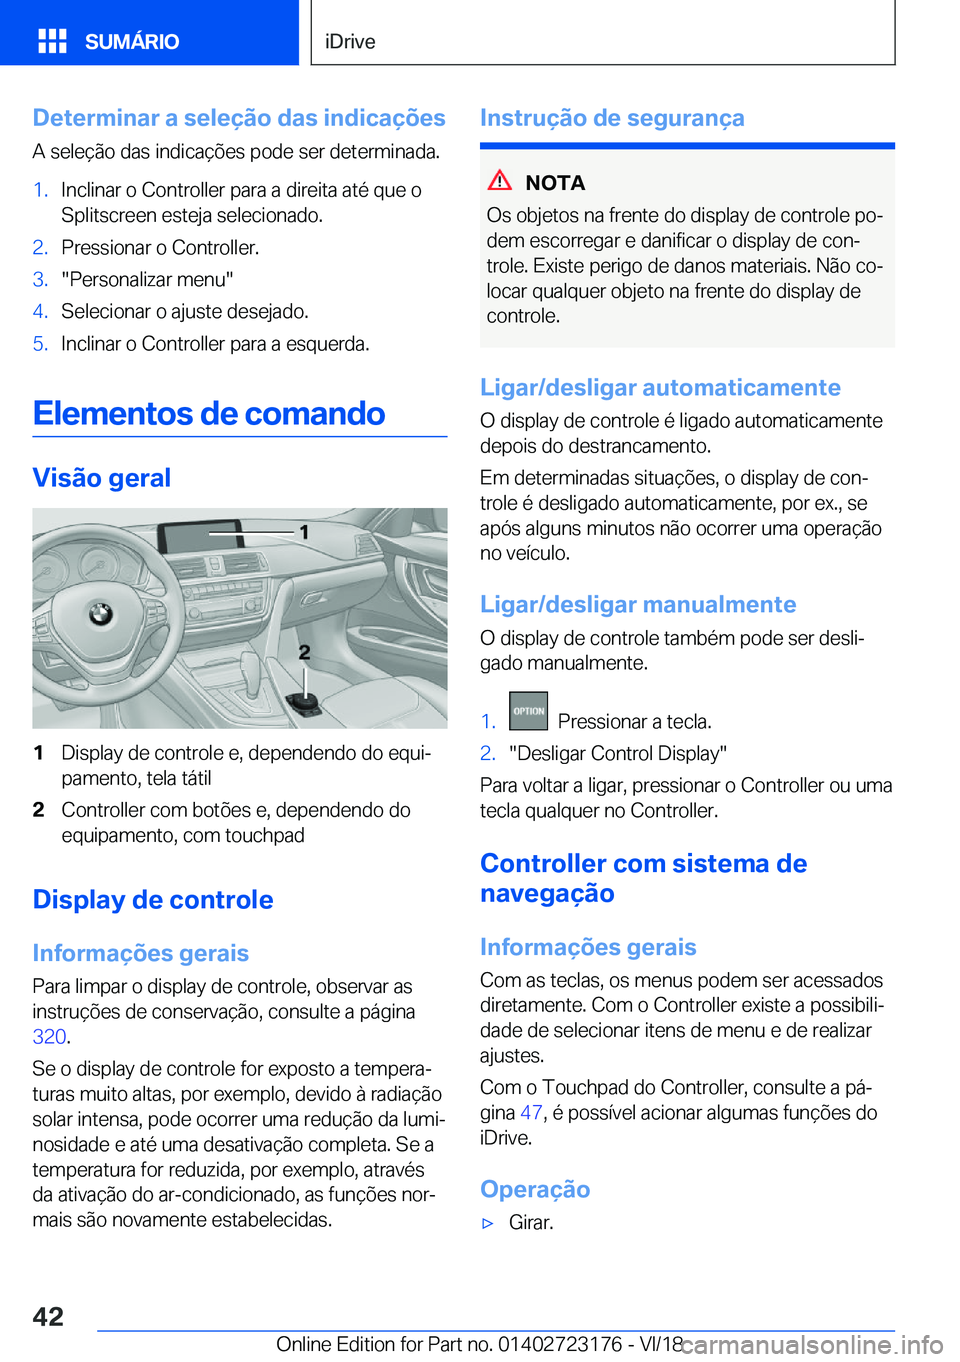 BMW 4 SERIES GRAN COUPE 2019  Manual do condutor (in Portuguese) �D�e�t�e�r�m�i�n�a�r��a��s�e�l�e�